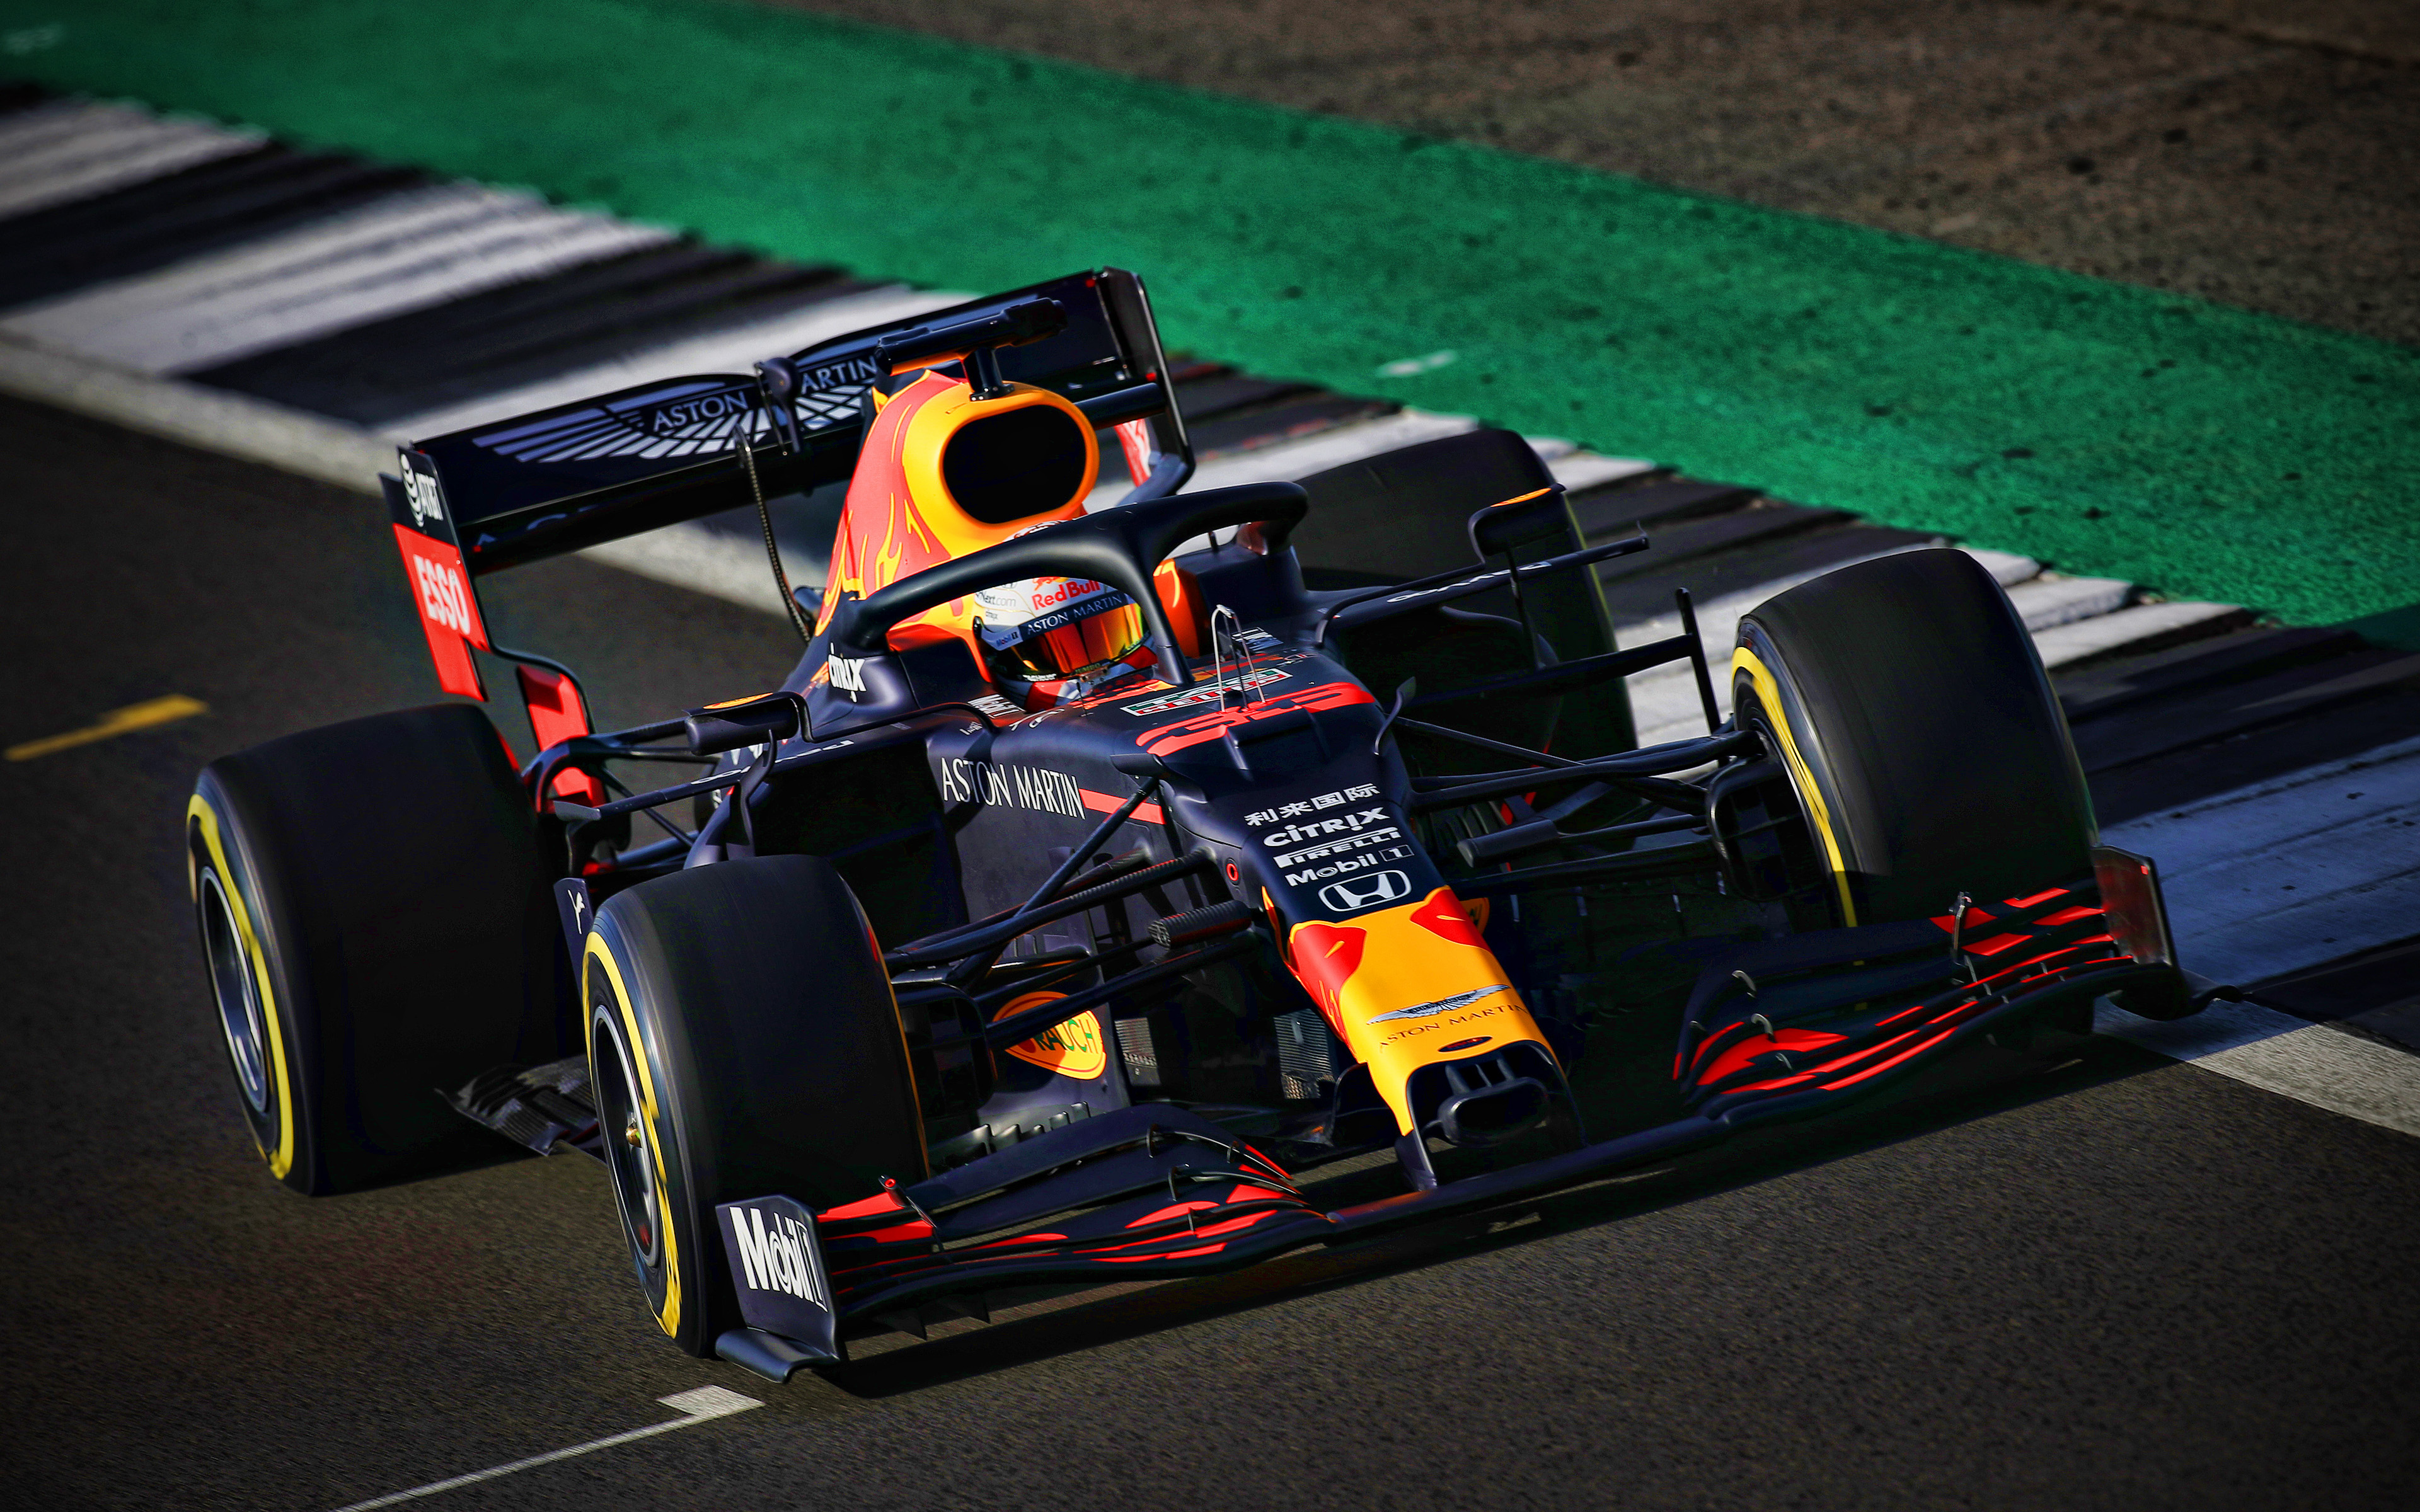 Download wallpapers 4k, Max Verstappen, Red Bull RB16, raceway, 2020 F1 ...